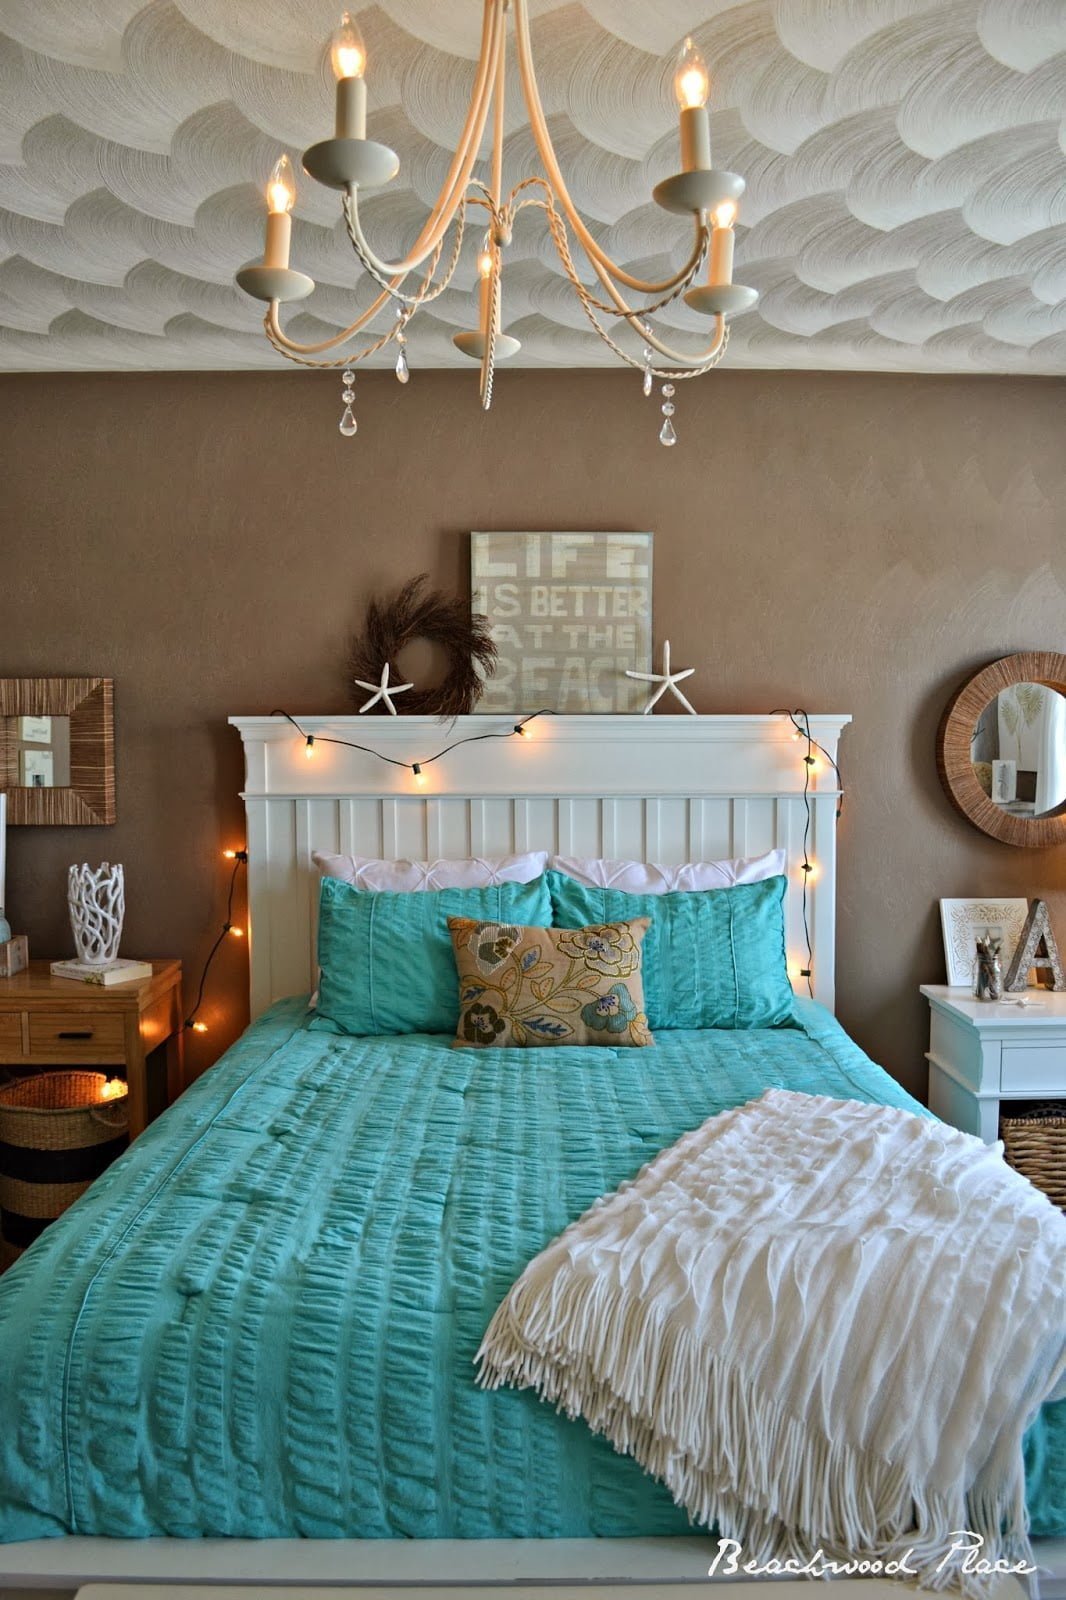 50 Best Bedroom Design Ideas for 2016